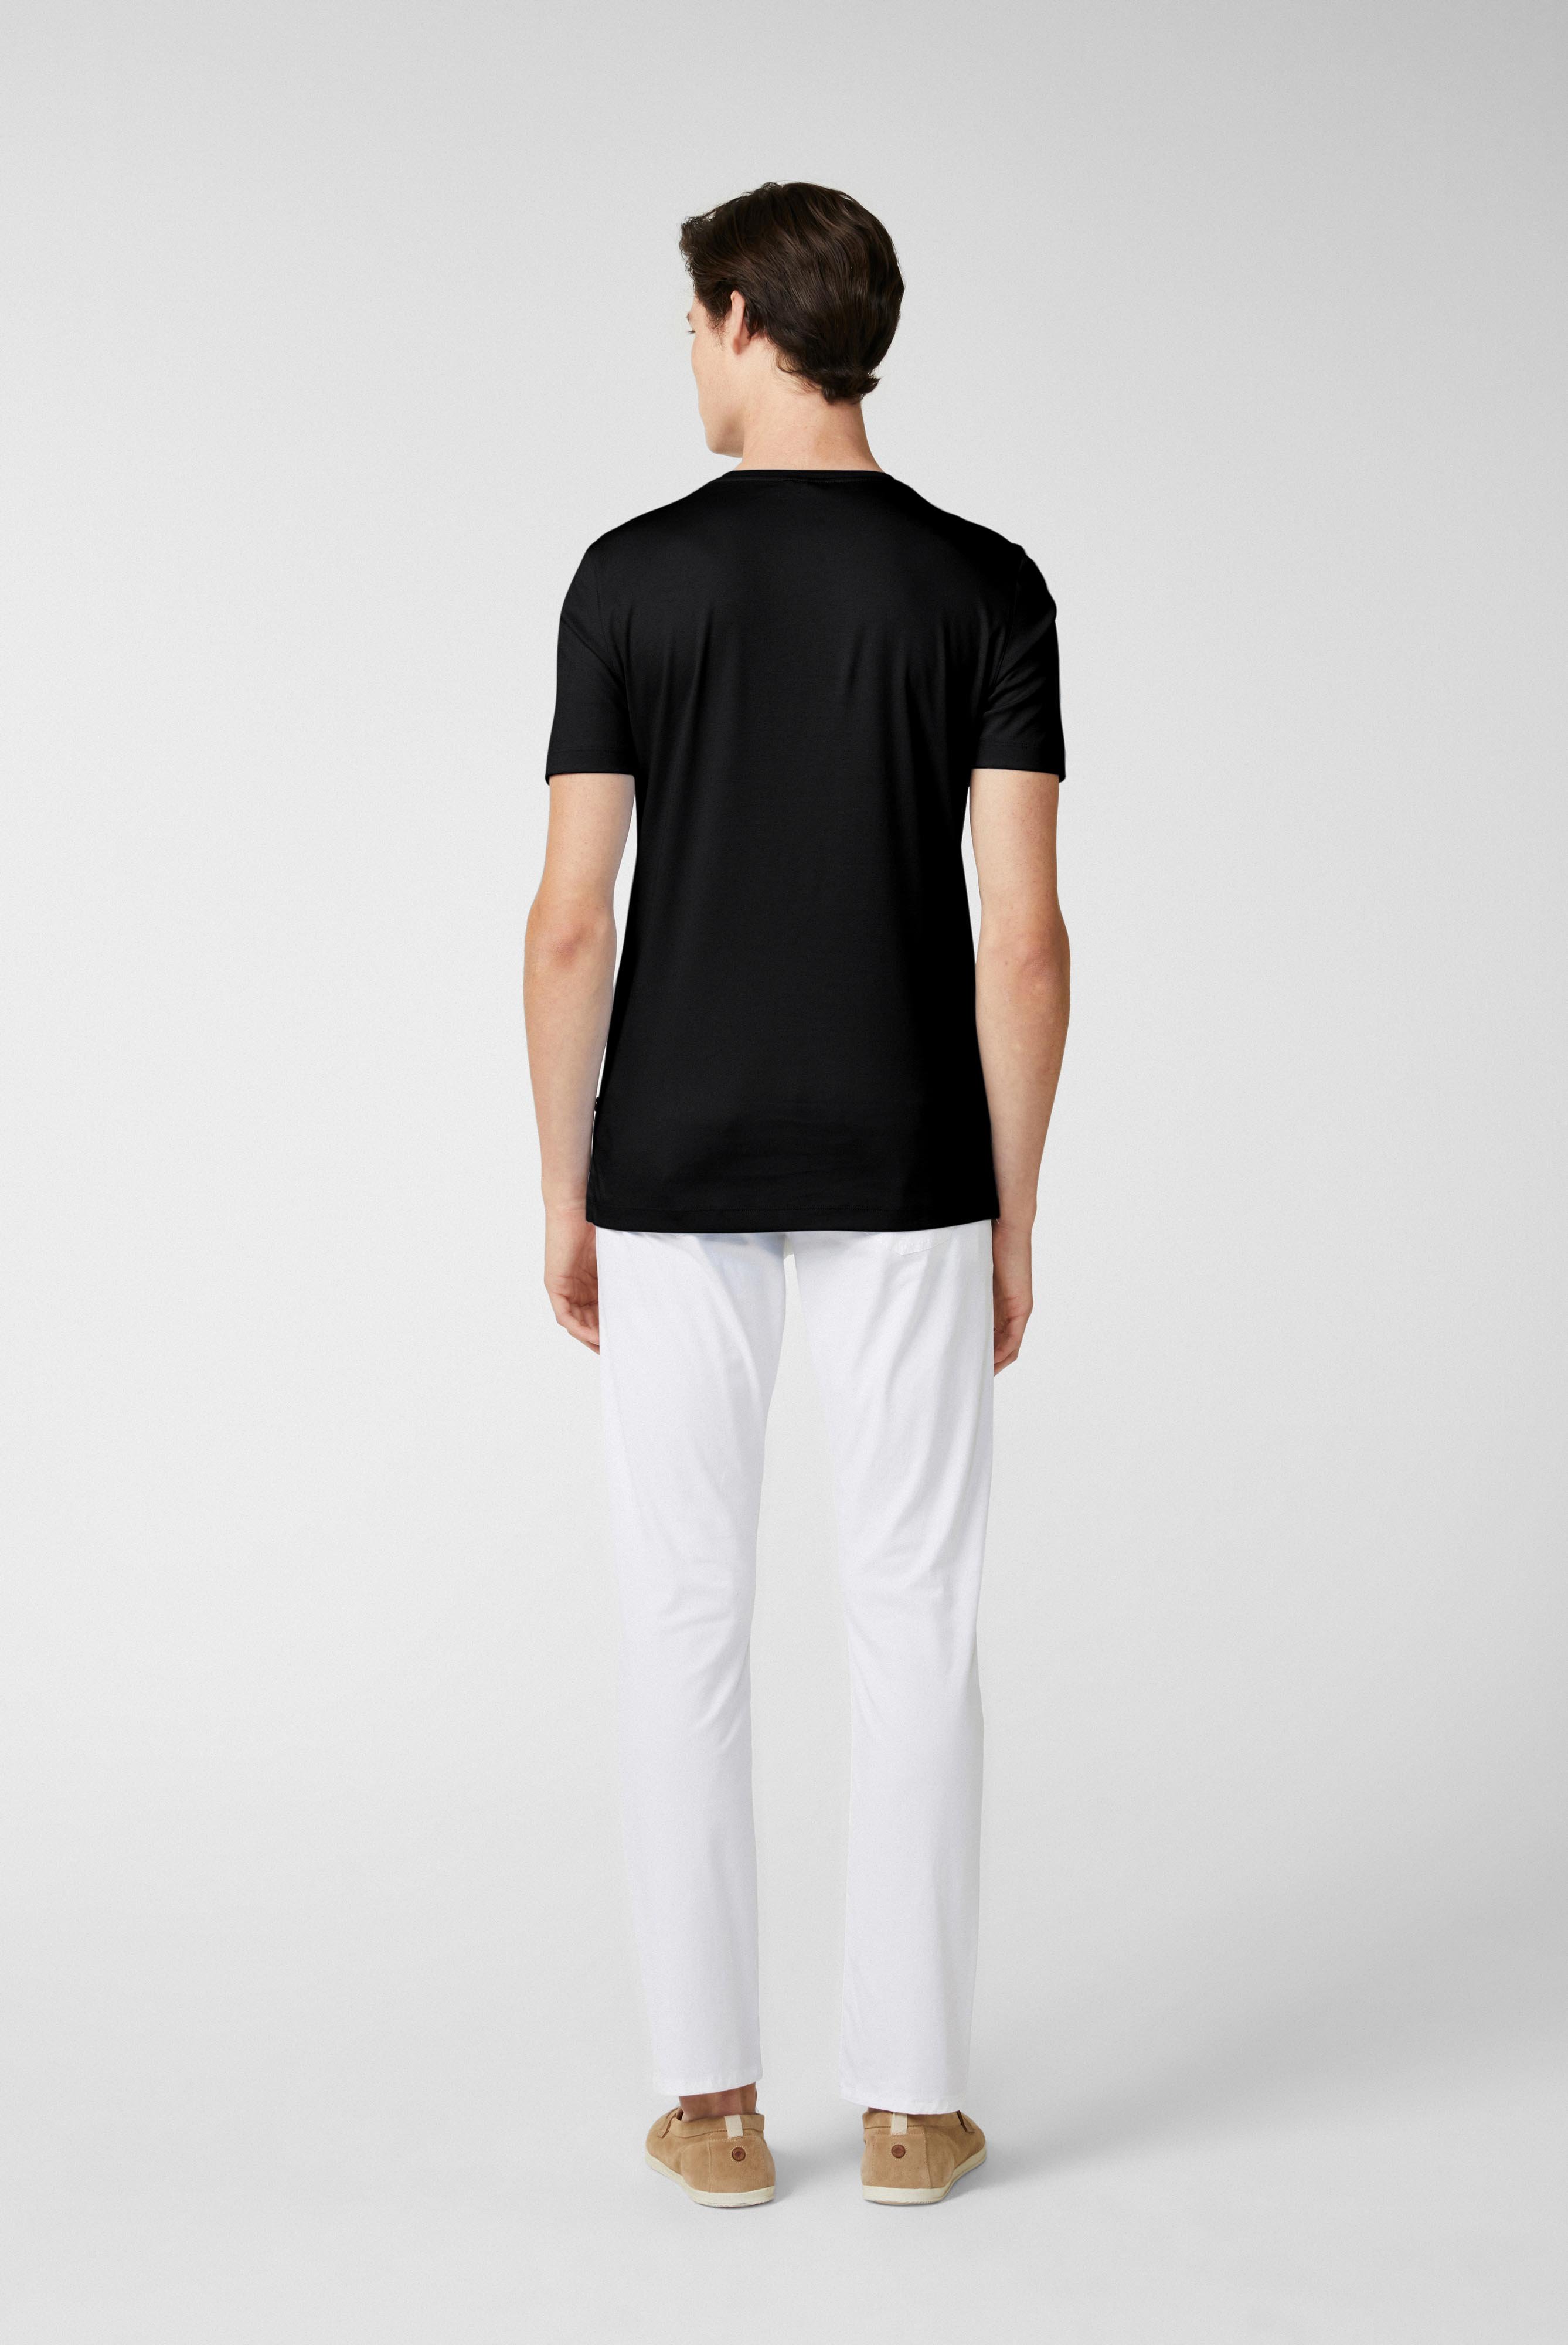 T-Shirts+Rundhals Jersey T-Shirt Slim Fit+20.1717.UX.180031.099.M